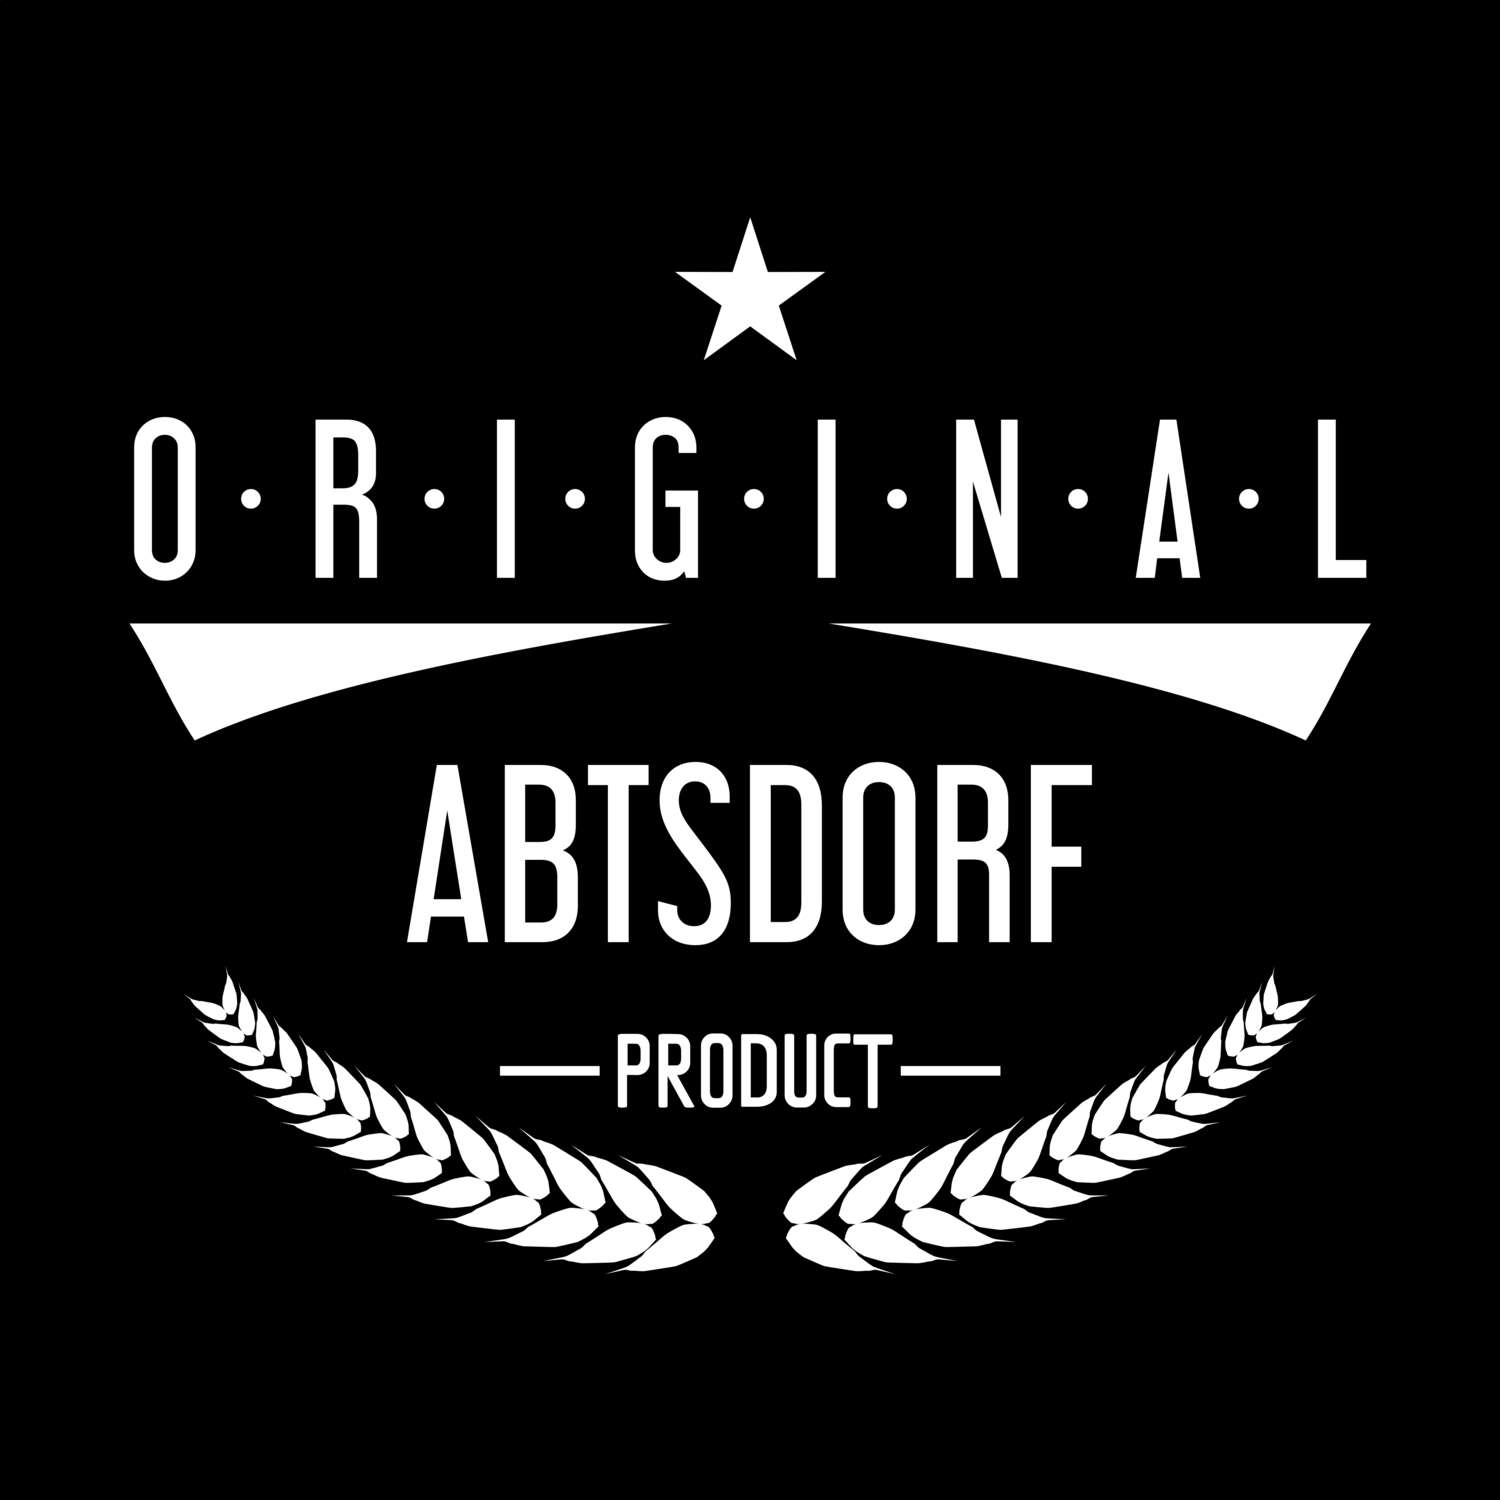 Abtsdorf T-Shirt »Original Product«